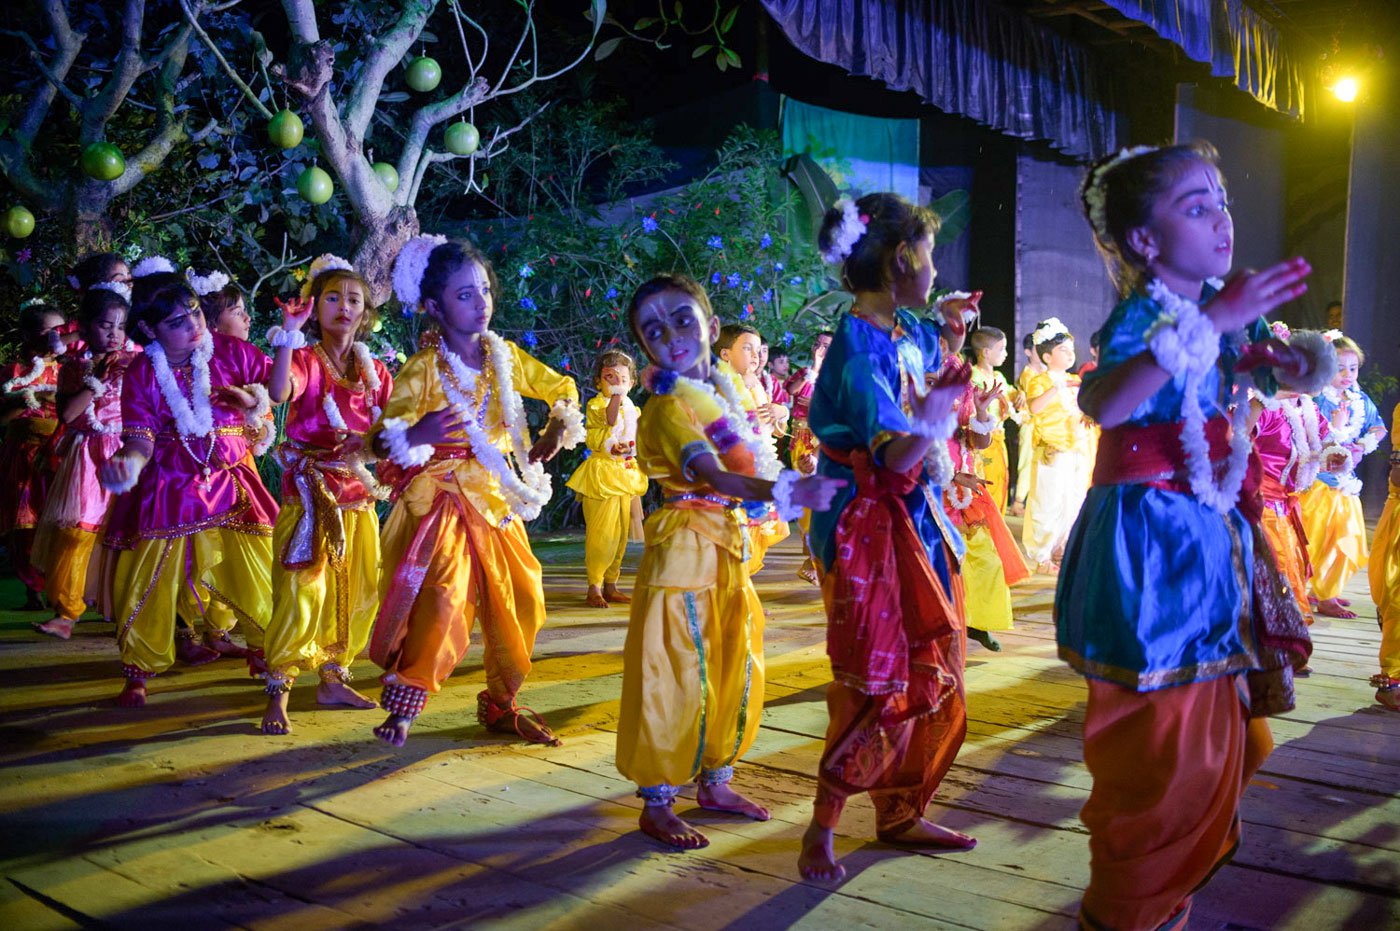 Children make up a large number of the performers at the Garamur Saru Satra Raas Mahotsav held in Majuli, Assam